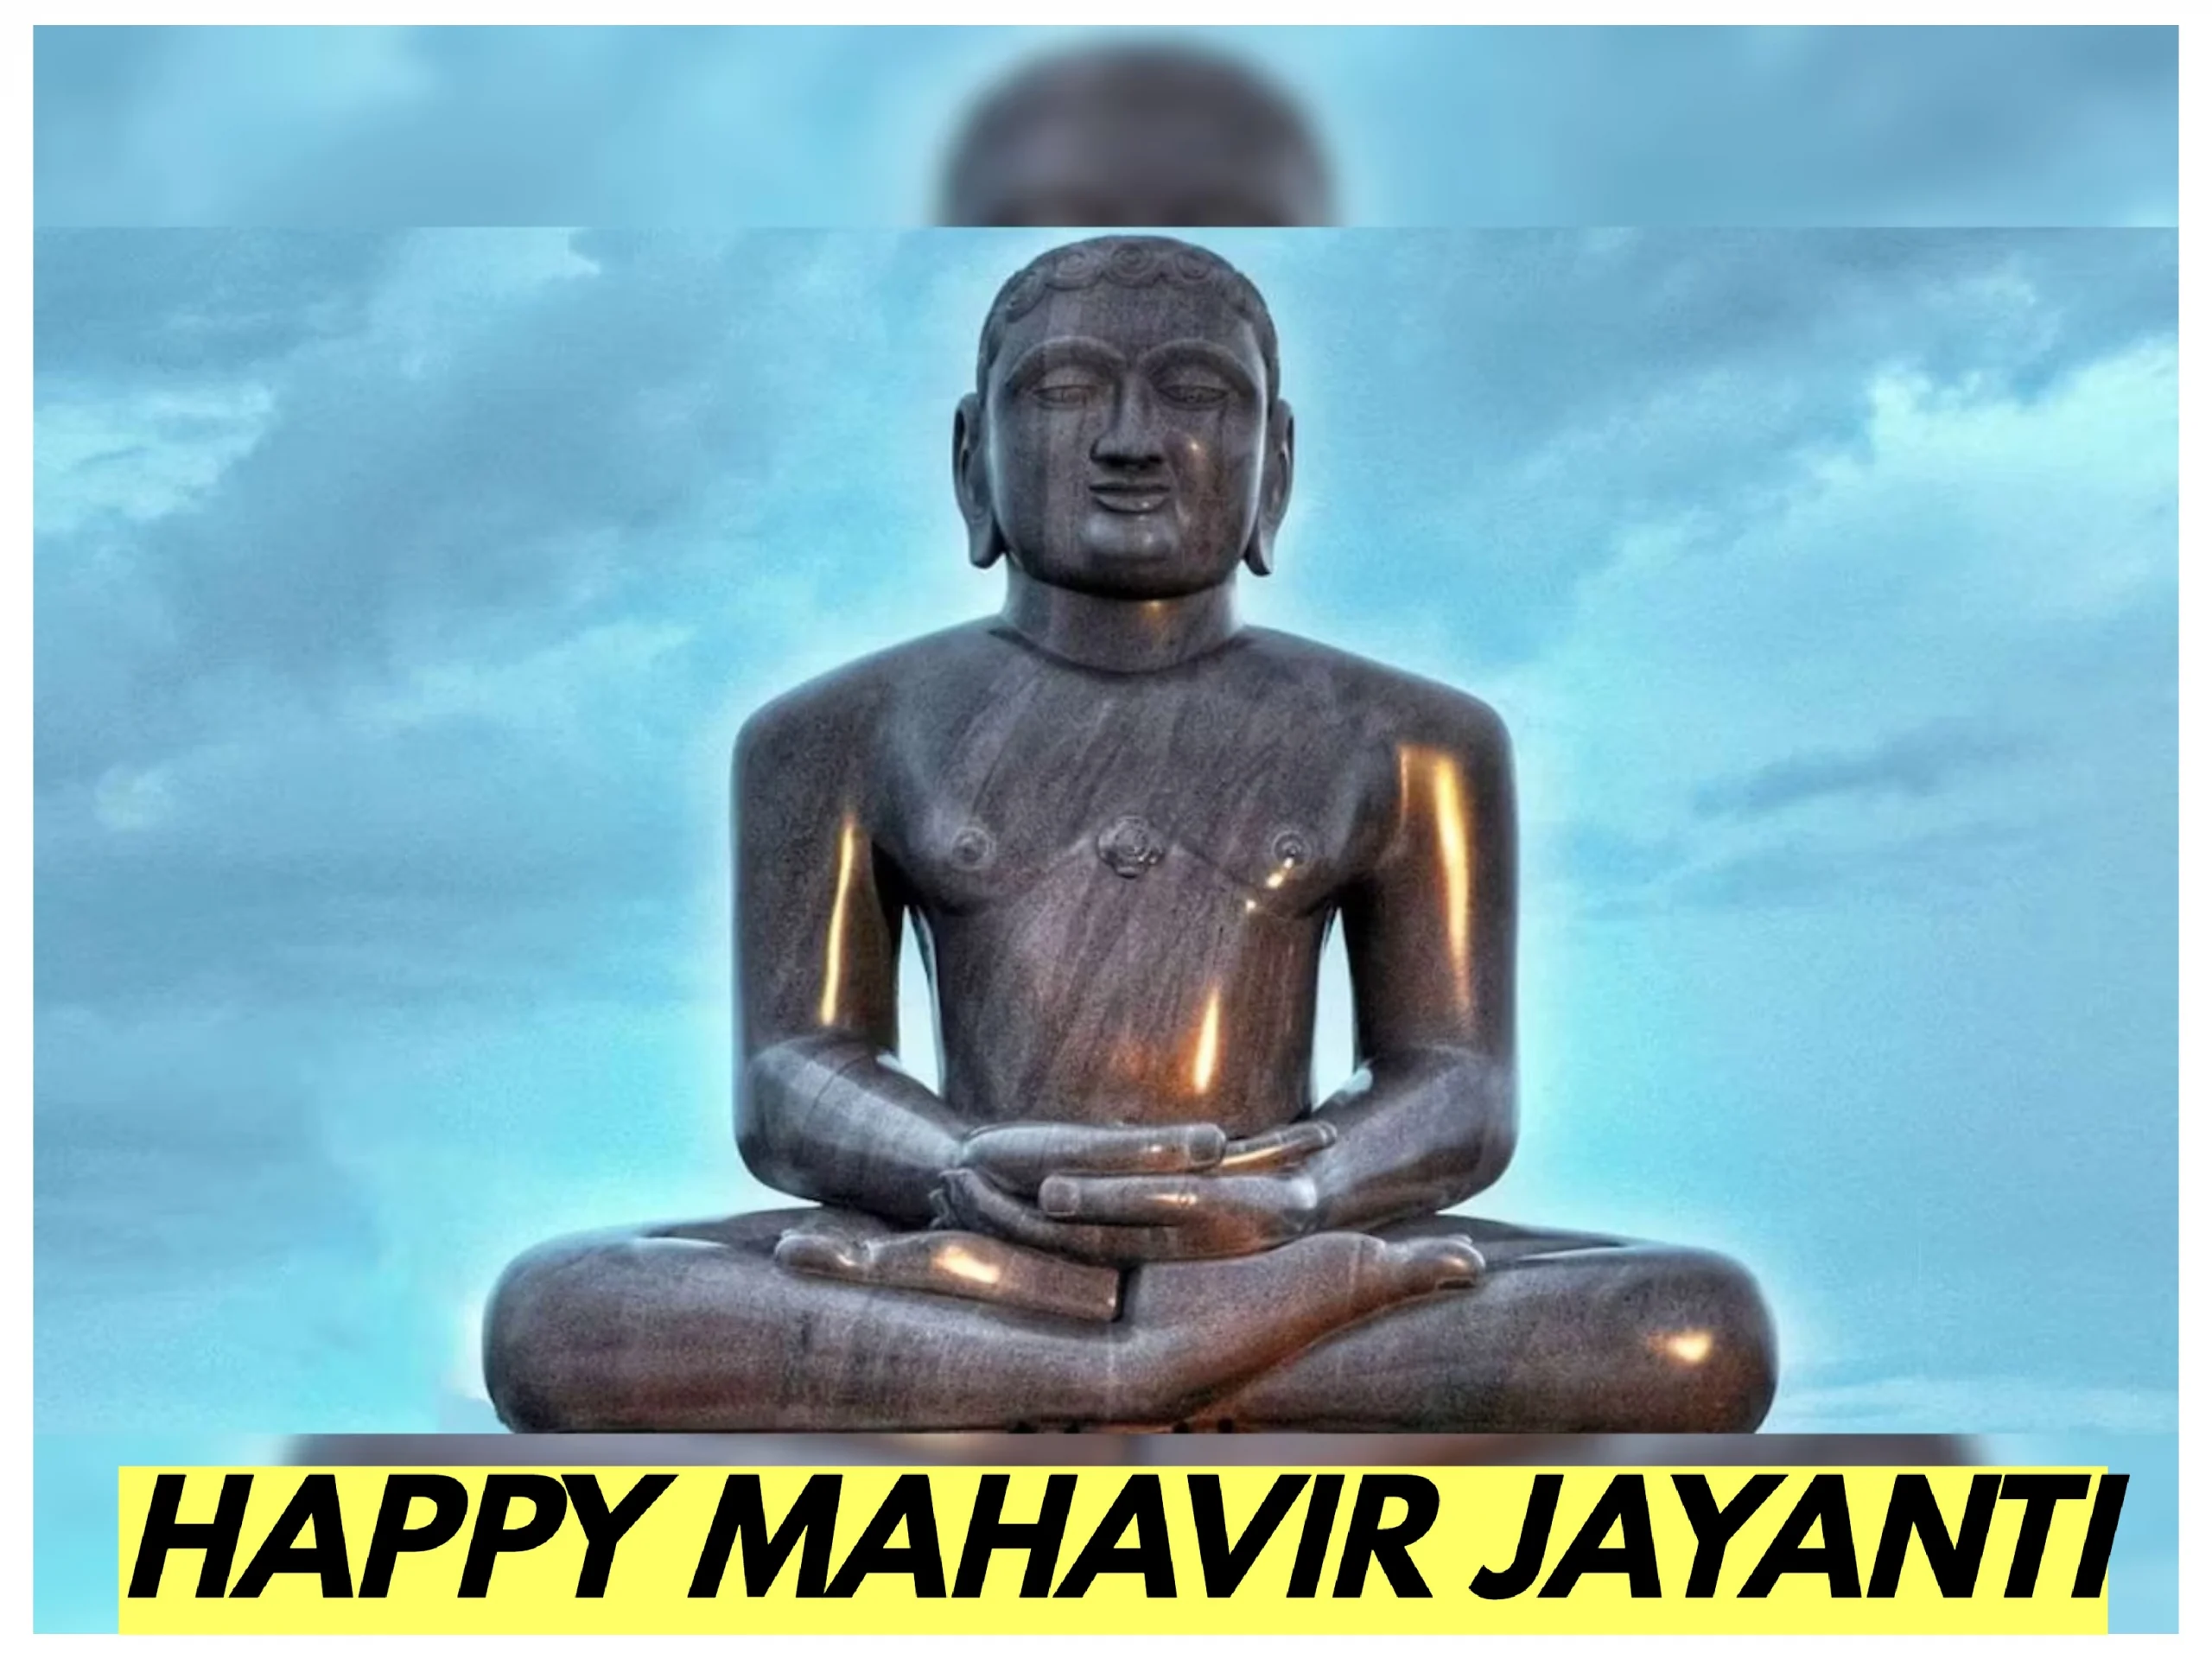 Happy Mahavir Jayanti: Know It’s Significance, Subh Muhurat, And Rituals